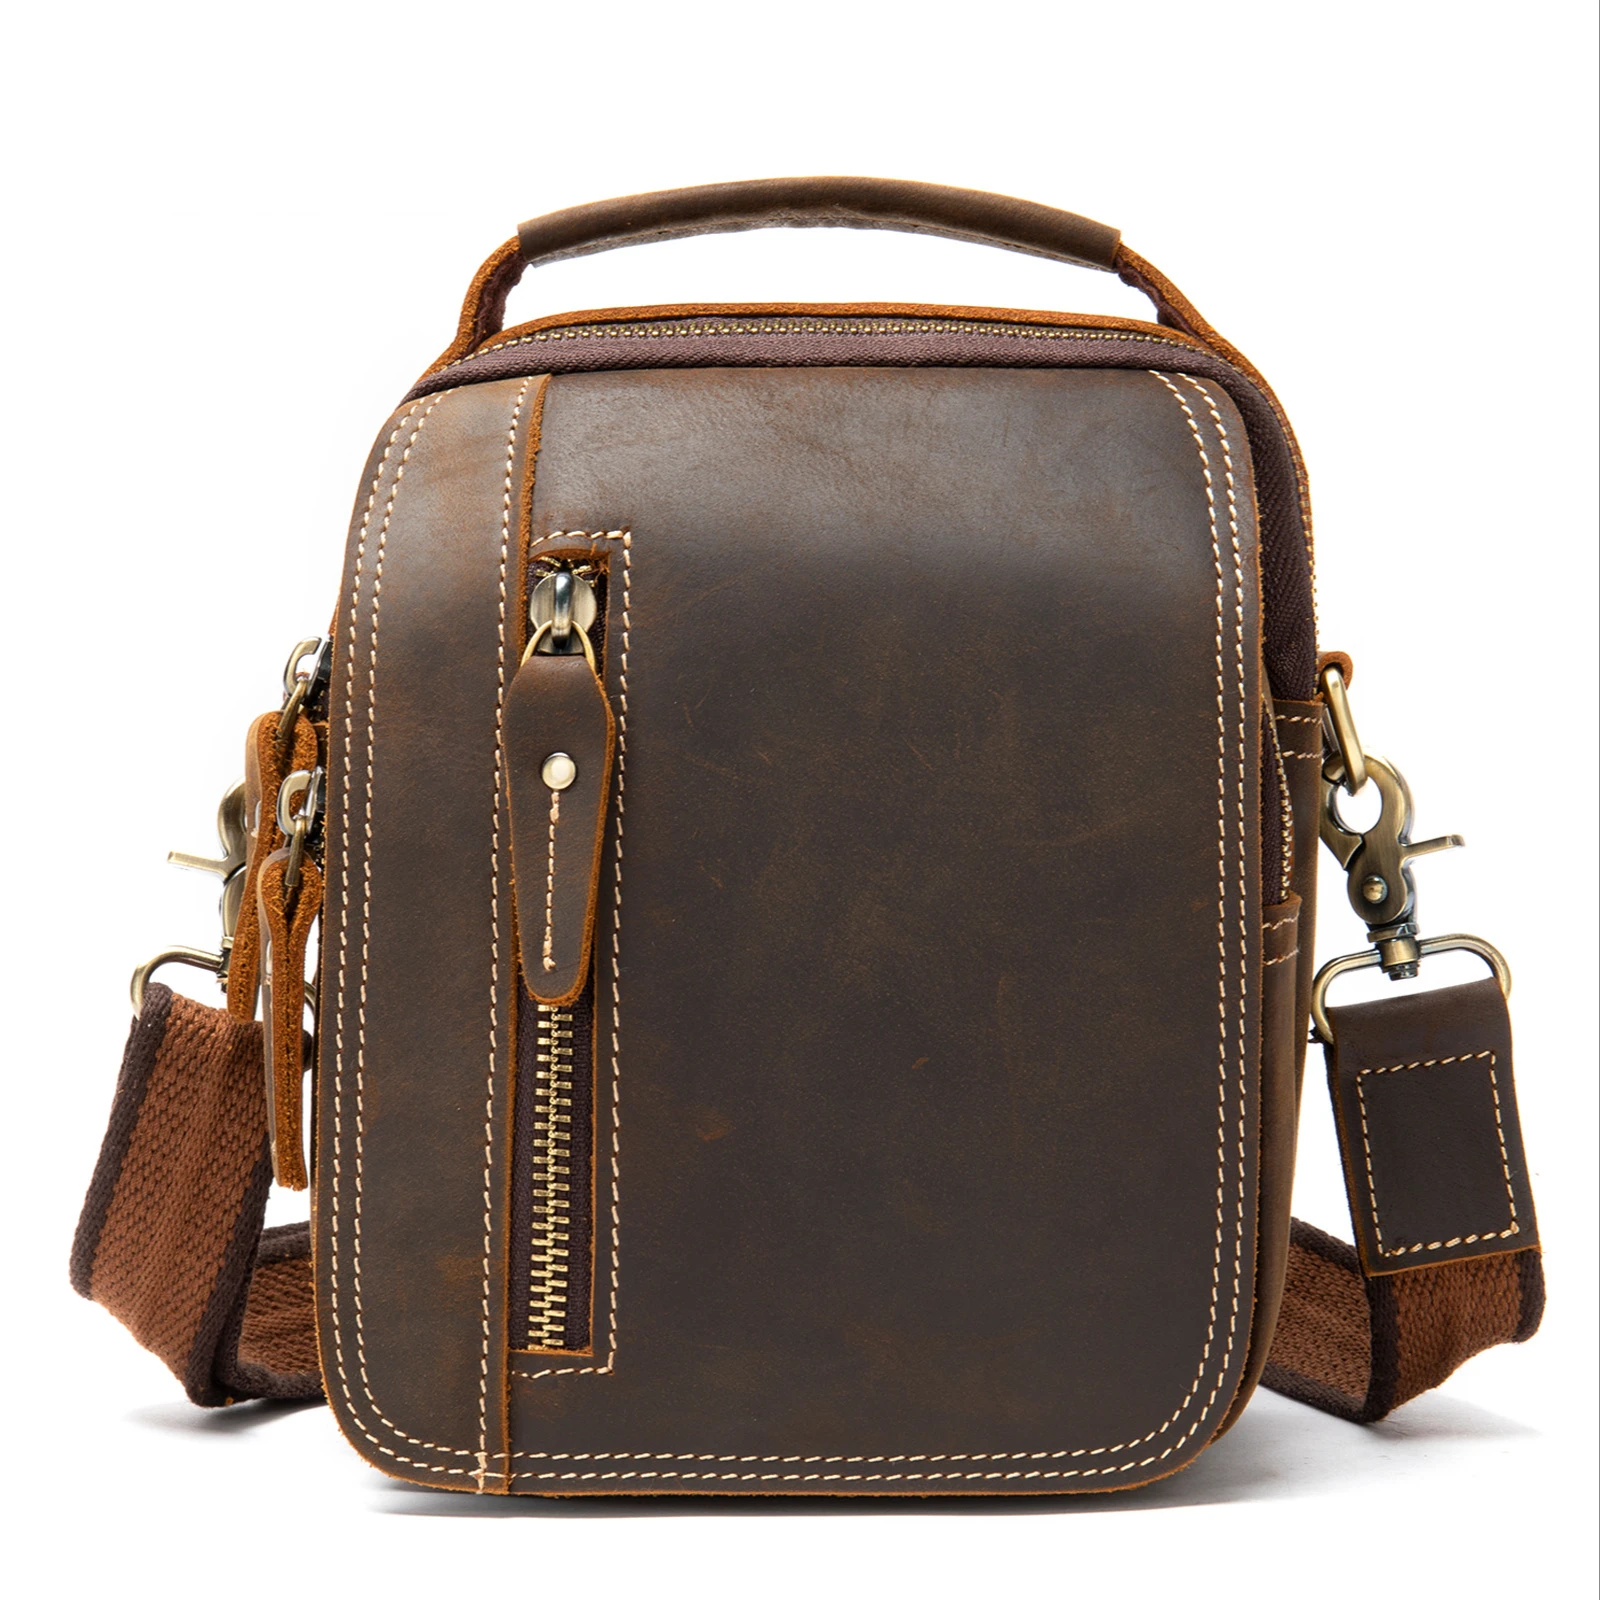 Nolvo 2022 New Men Leather Messenger Bag Waterproof Wear-resistant Large Capacity Shoulder Bags Can Be Used As Handbags Clutches